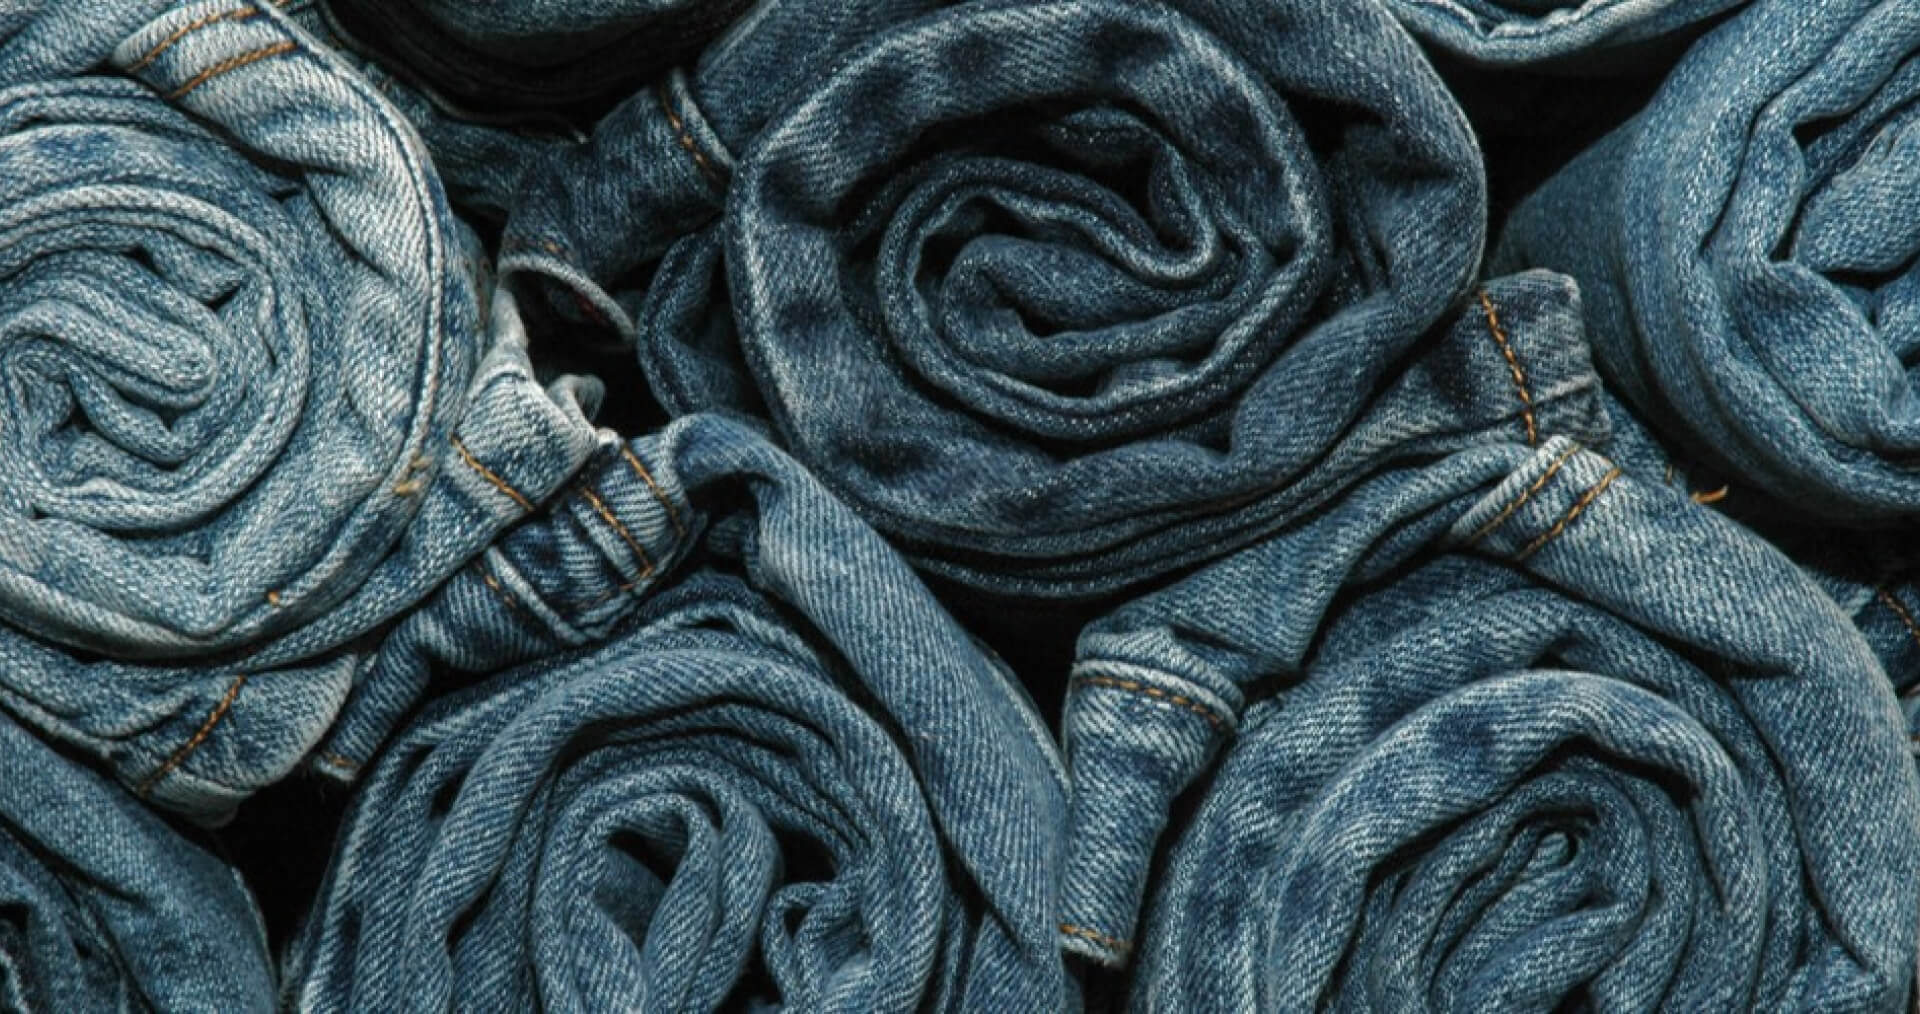 Premium denim jeans market to grow at 8% CAGR in 2017-2021